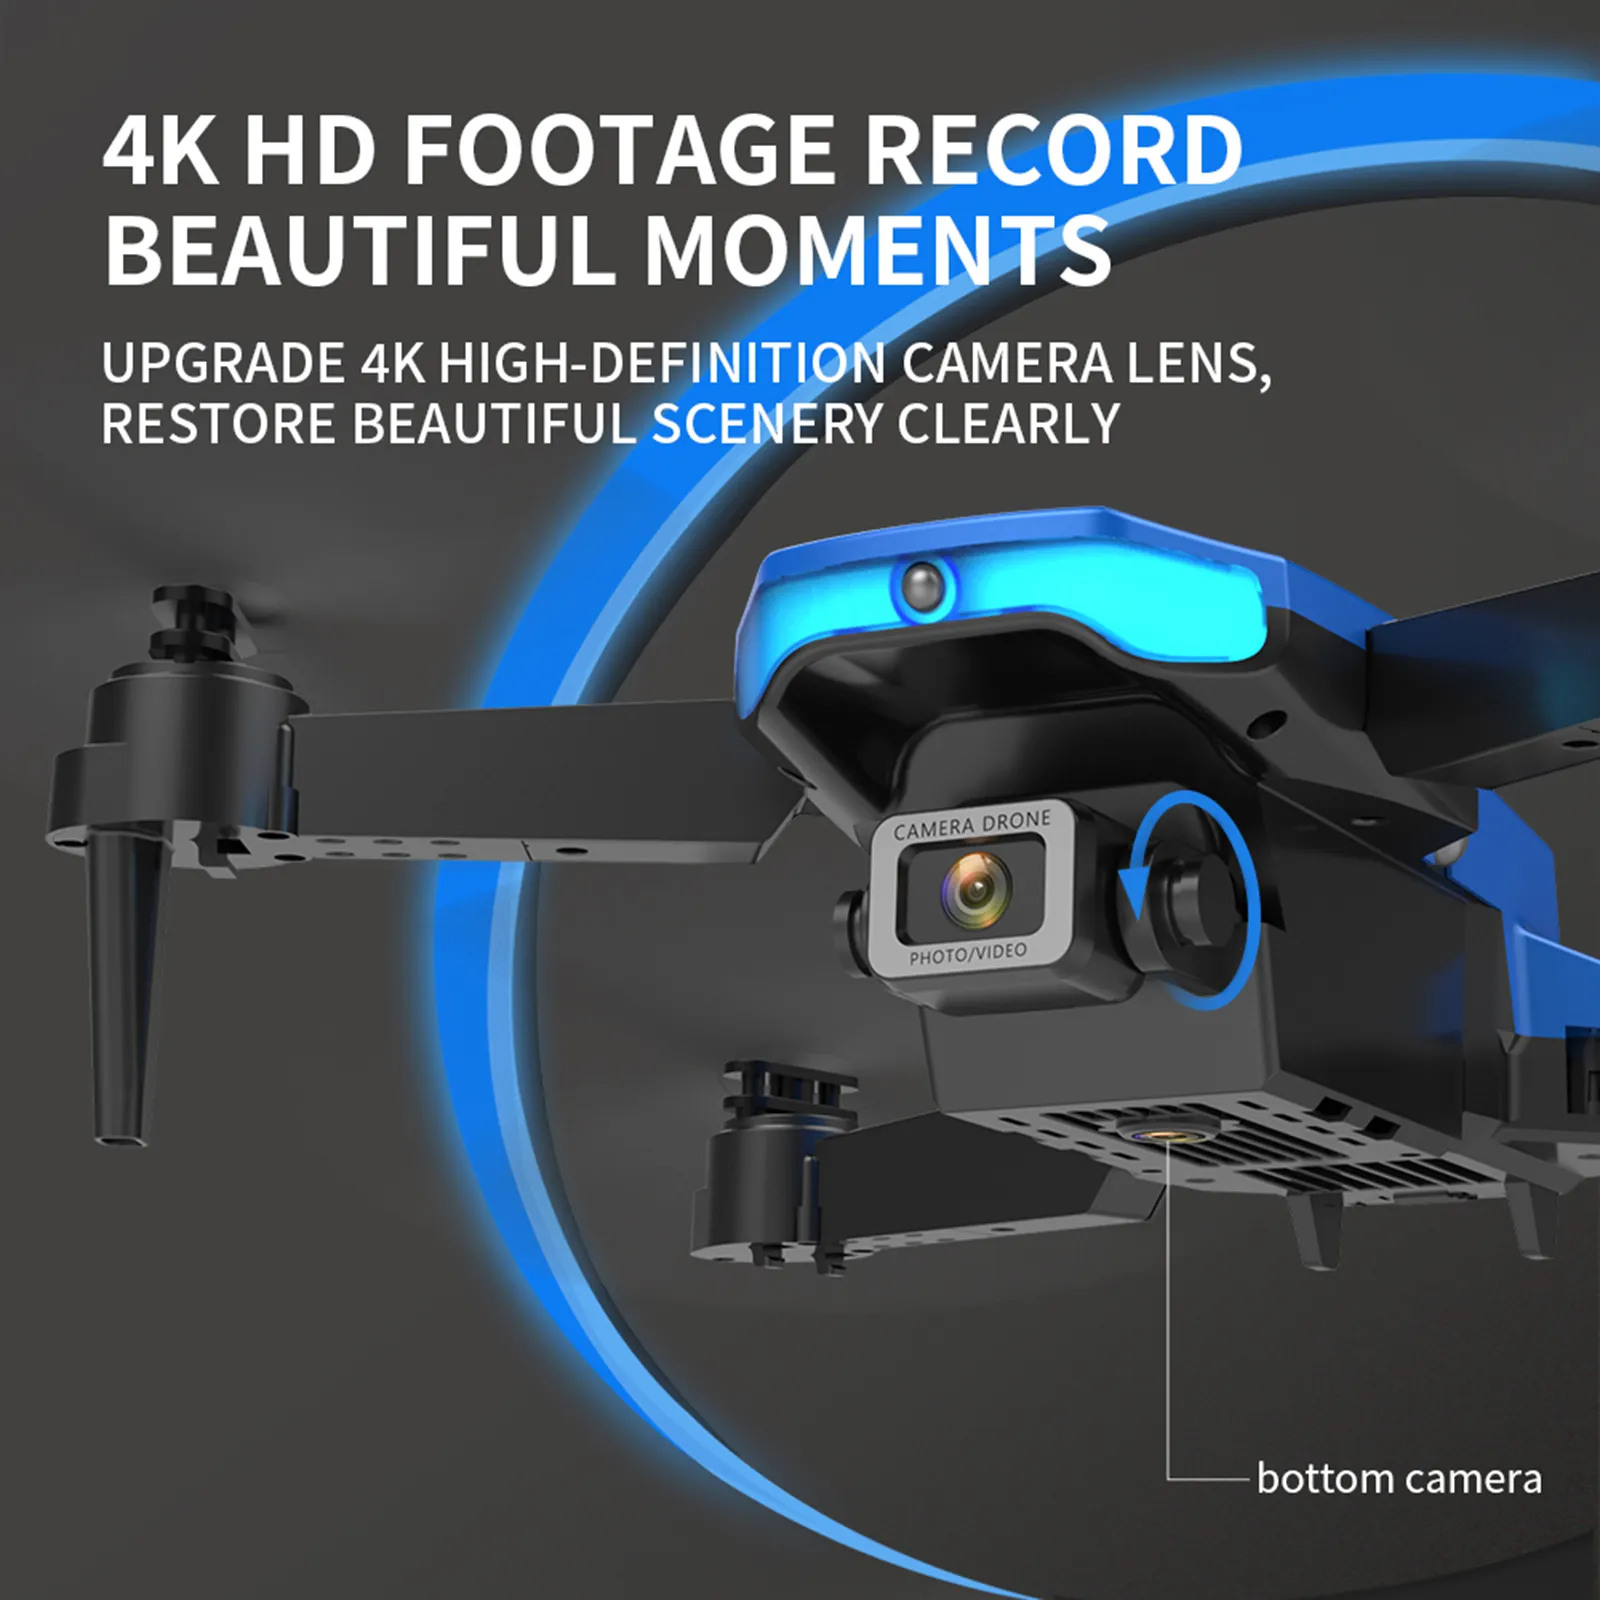 F185 Pro RC Drone 4K Profession HD Camera Simulators With WiFi FPV Altitude Hold Quadcopter foldble quadcopter Drones Toy for Boys